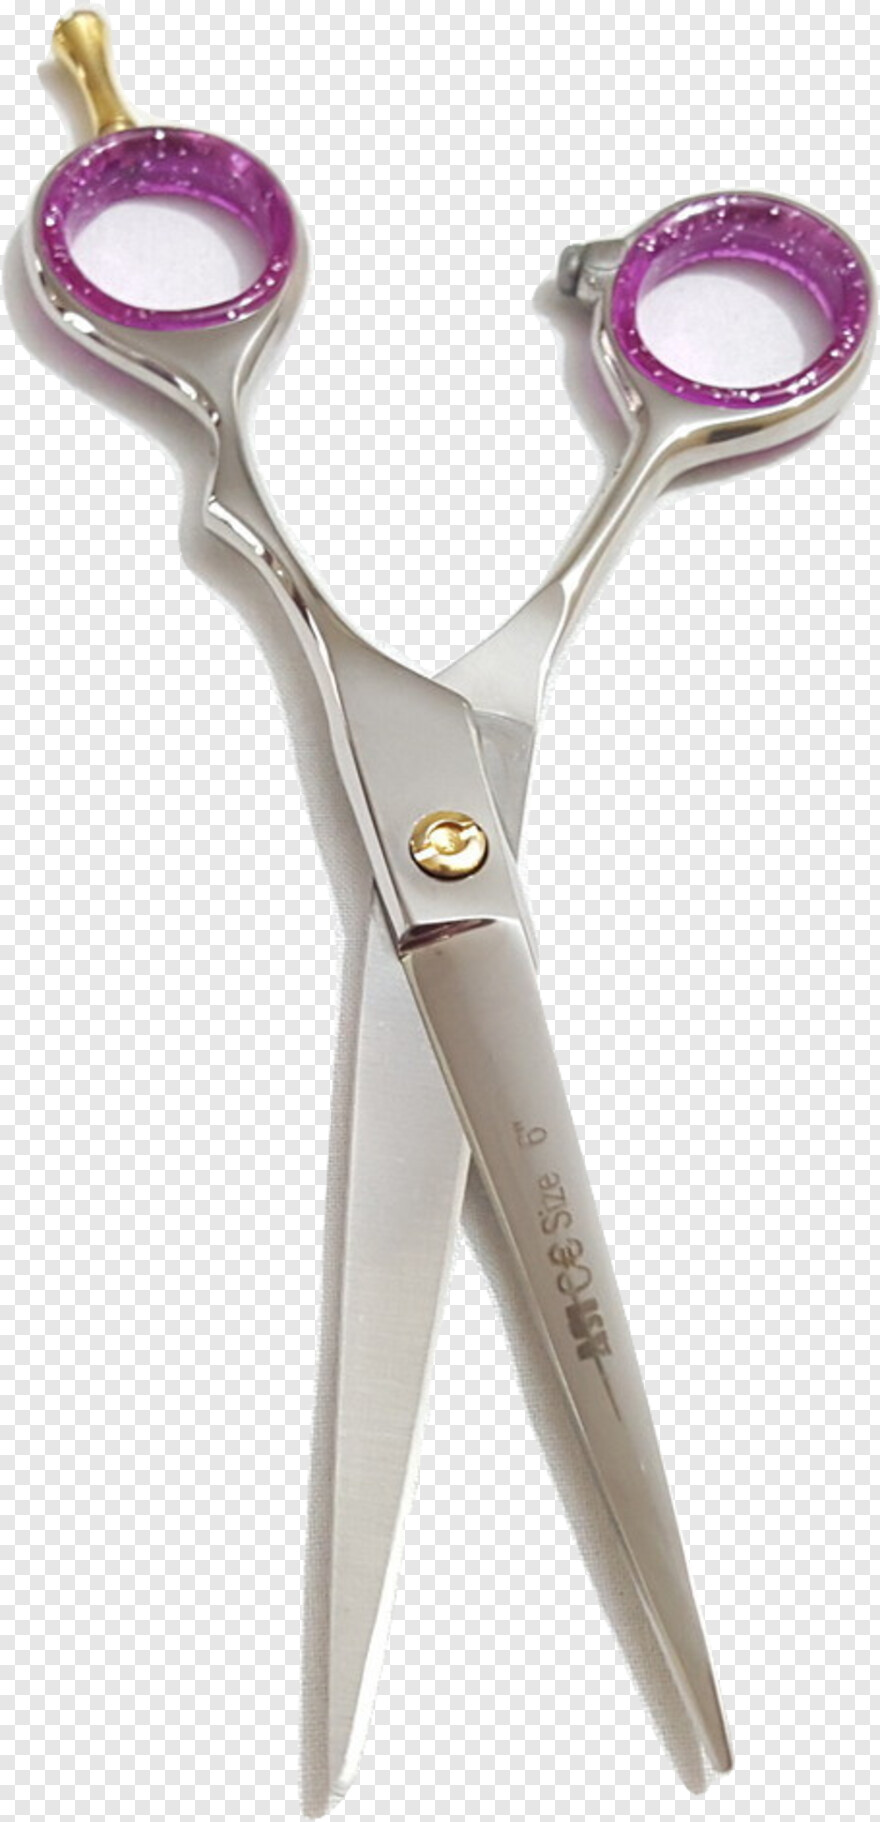 scissors-icon # 557016